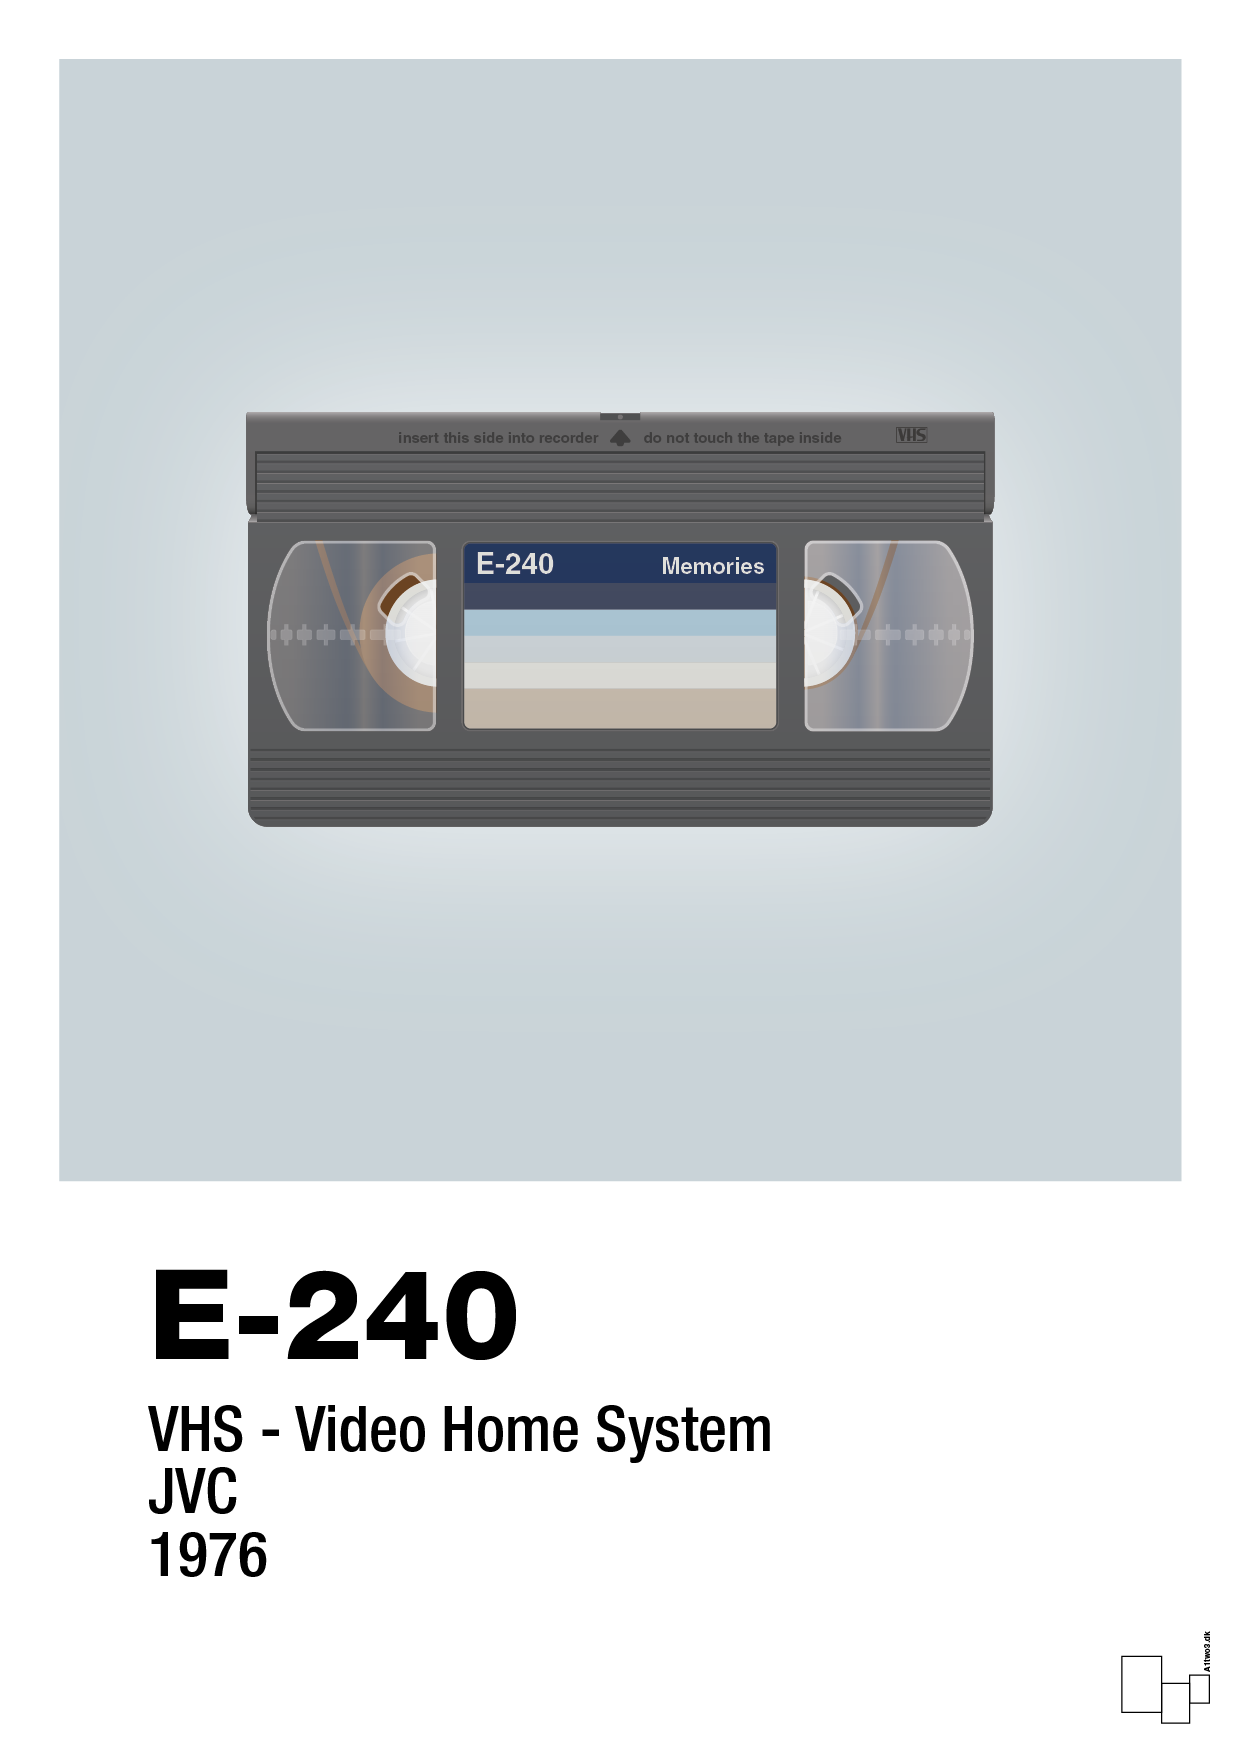 videobånd e-240 - Plakat med Grafik i Light Drizzle